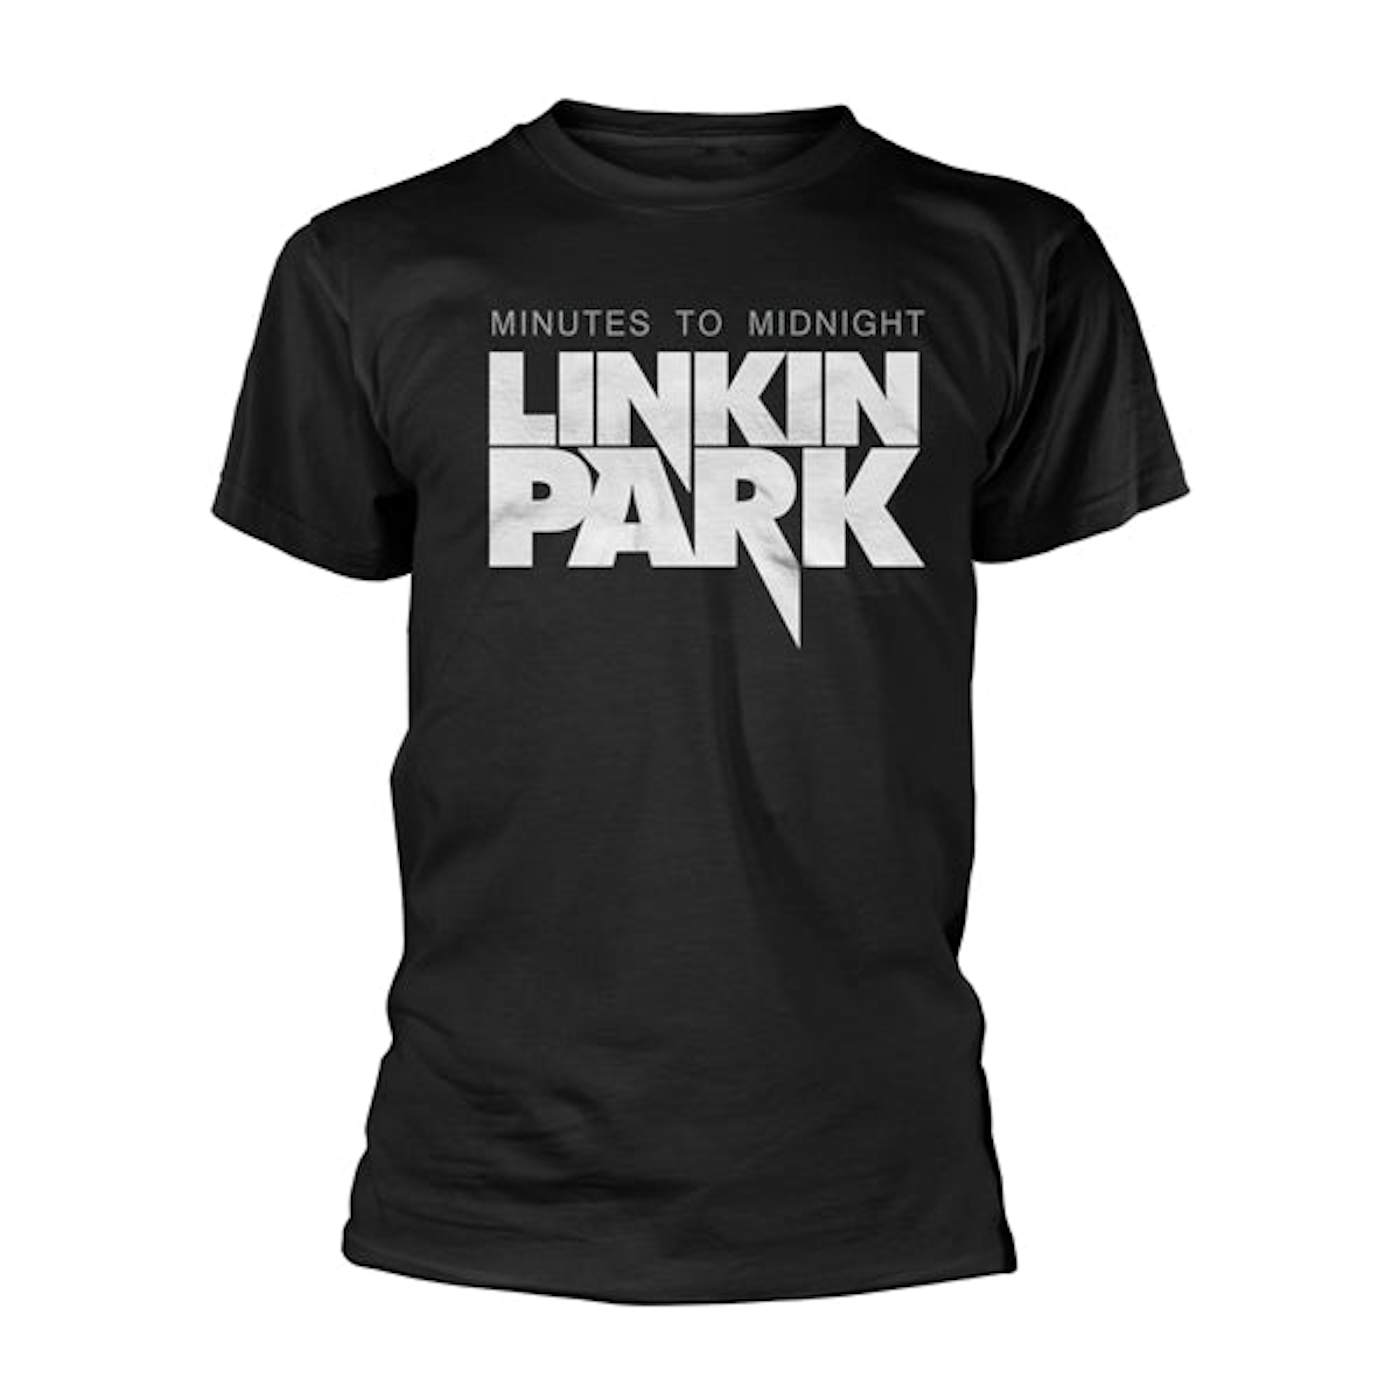 Linkin Park T-Shirt - Minutes To Midnight